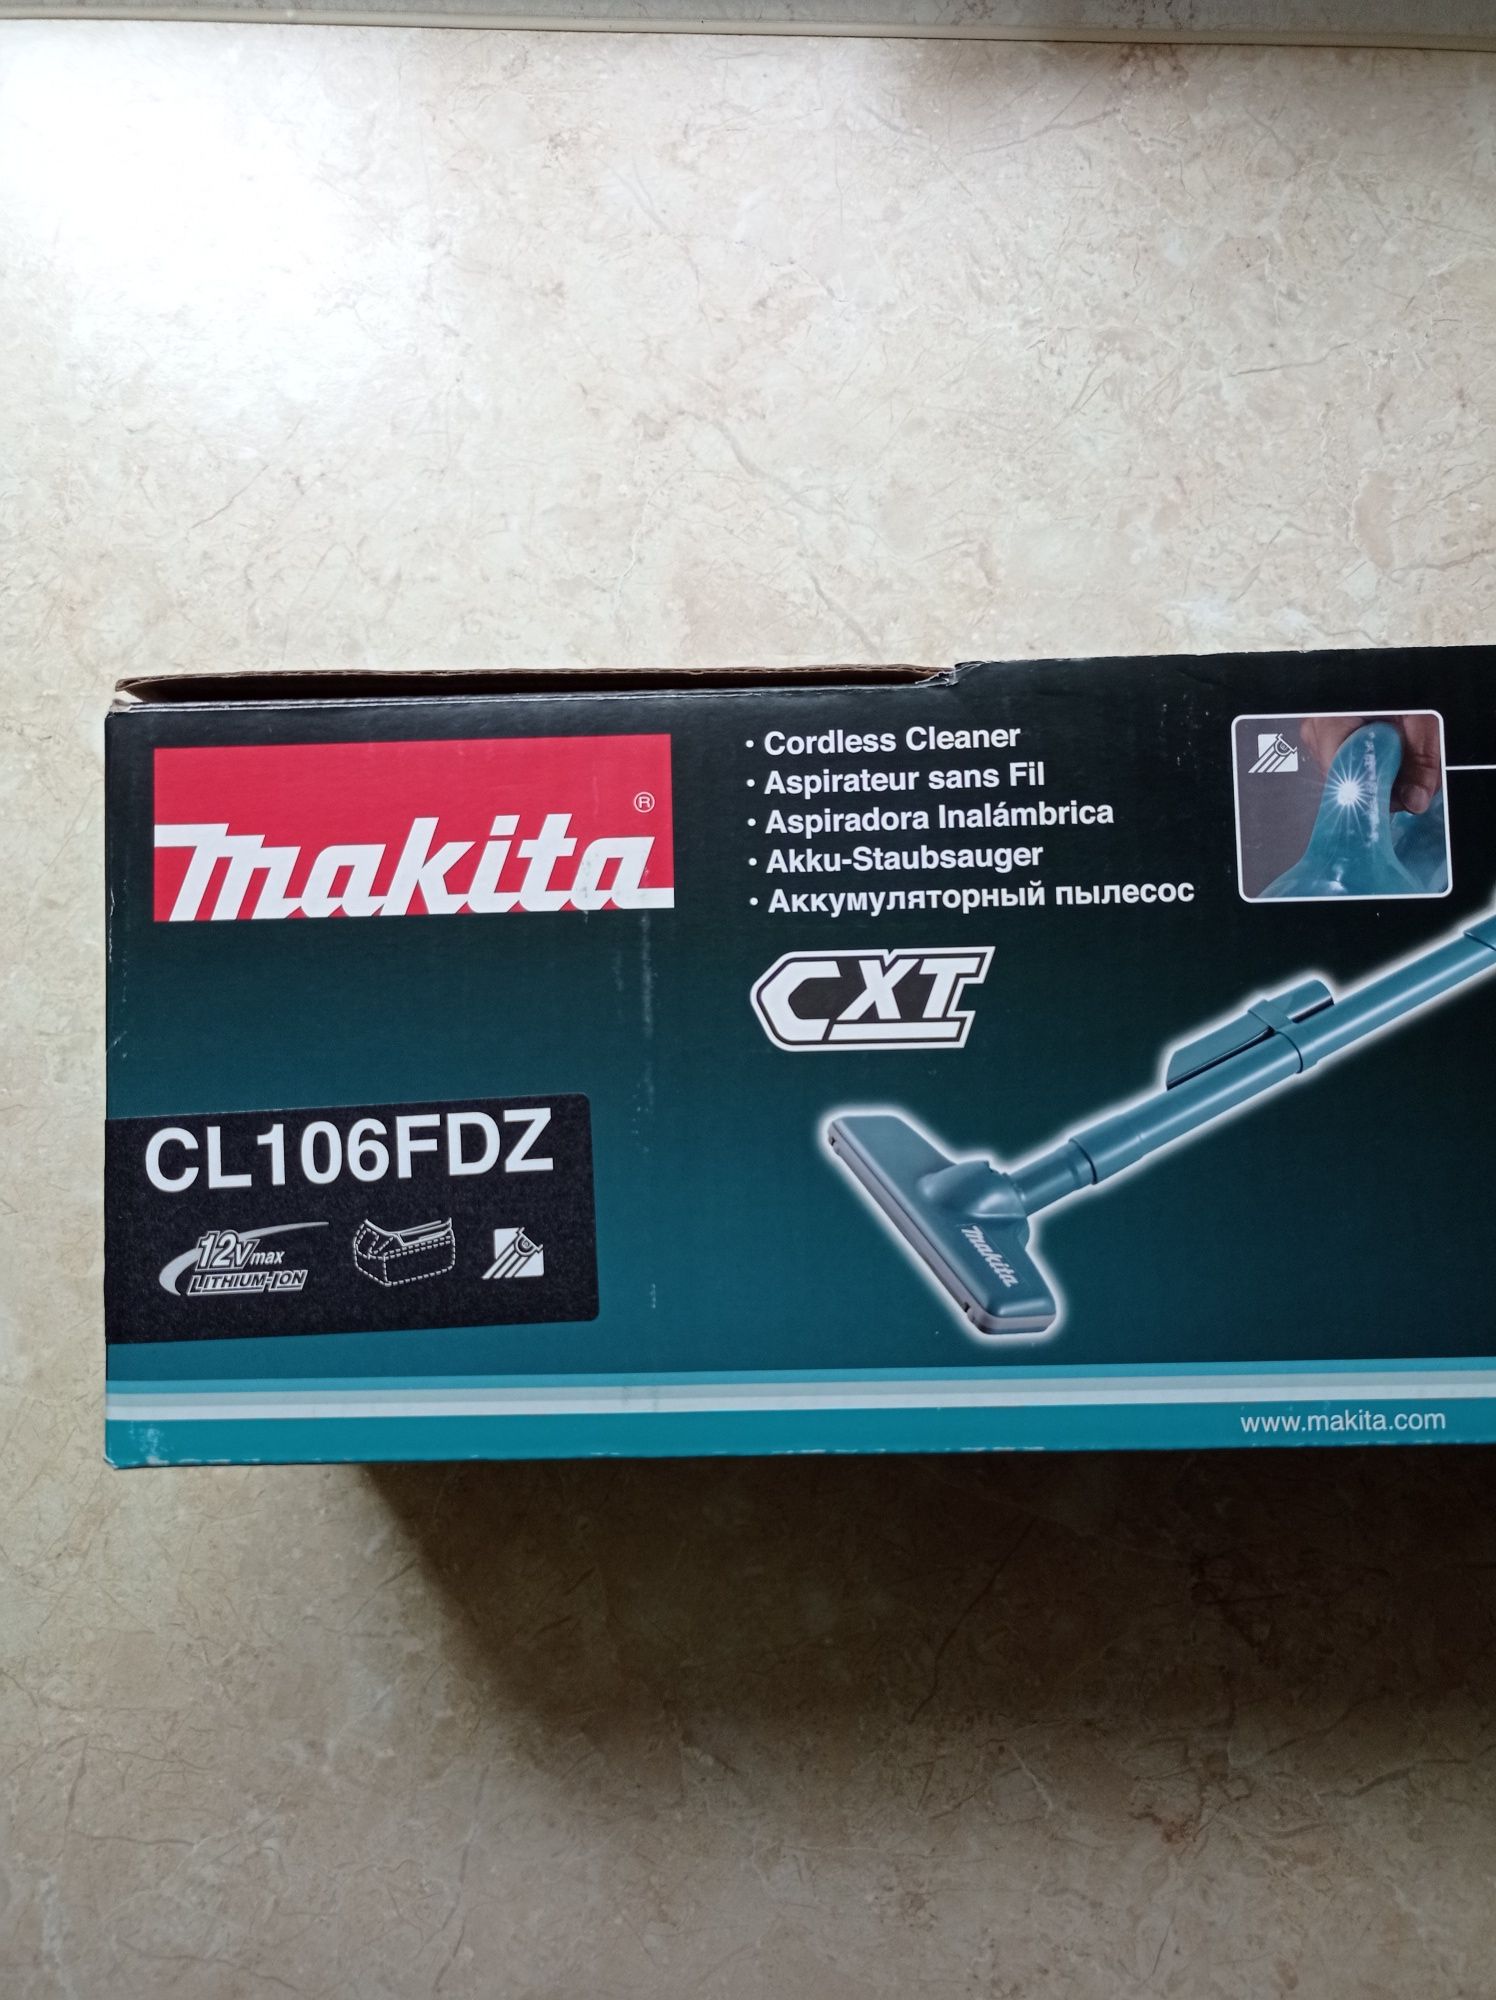 Makita CL106FDZ 12V. (CXT)